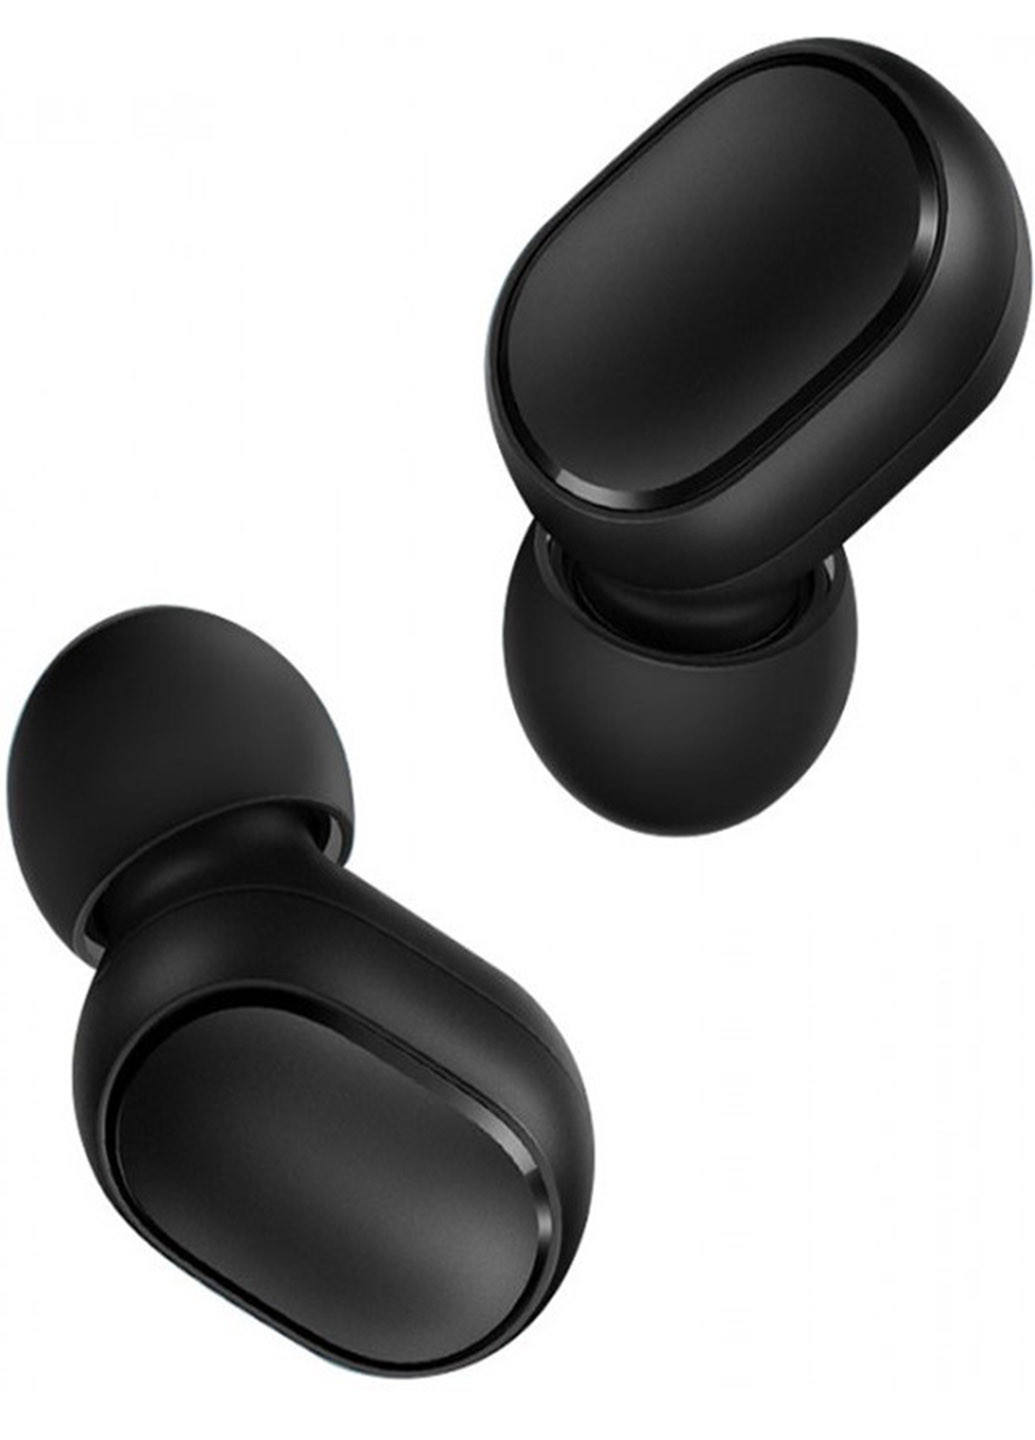 Наушники Mi True Wireless Earbuds Basic 2 Black Xiaomi TWSEJ061LS чёрные